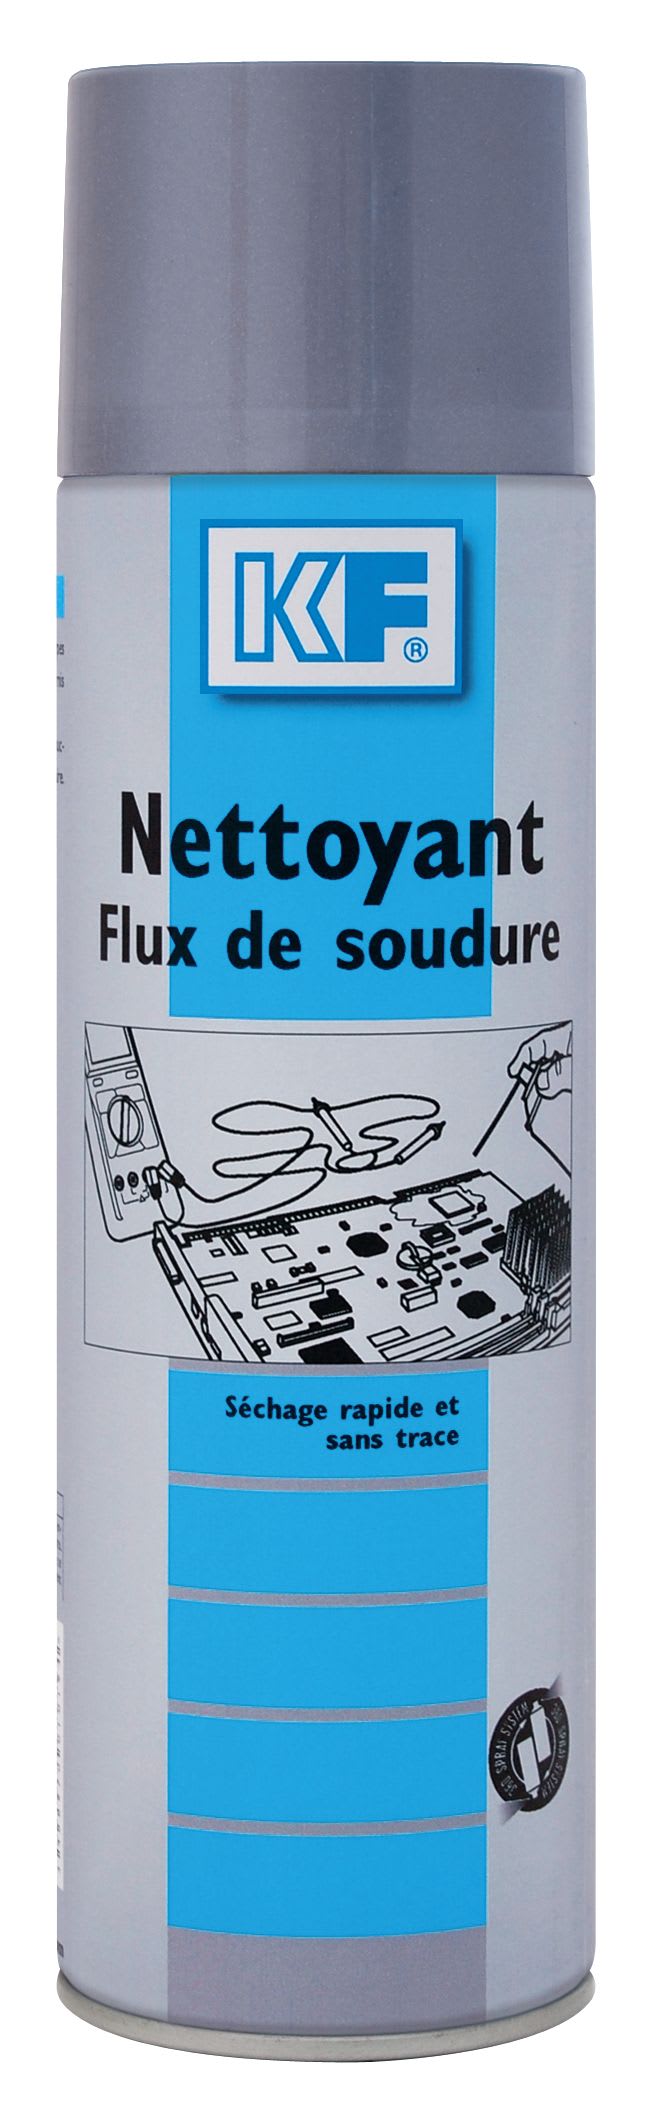 Kf - NETTOYANT FLUX DE SOUDURE 400 ML